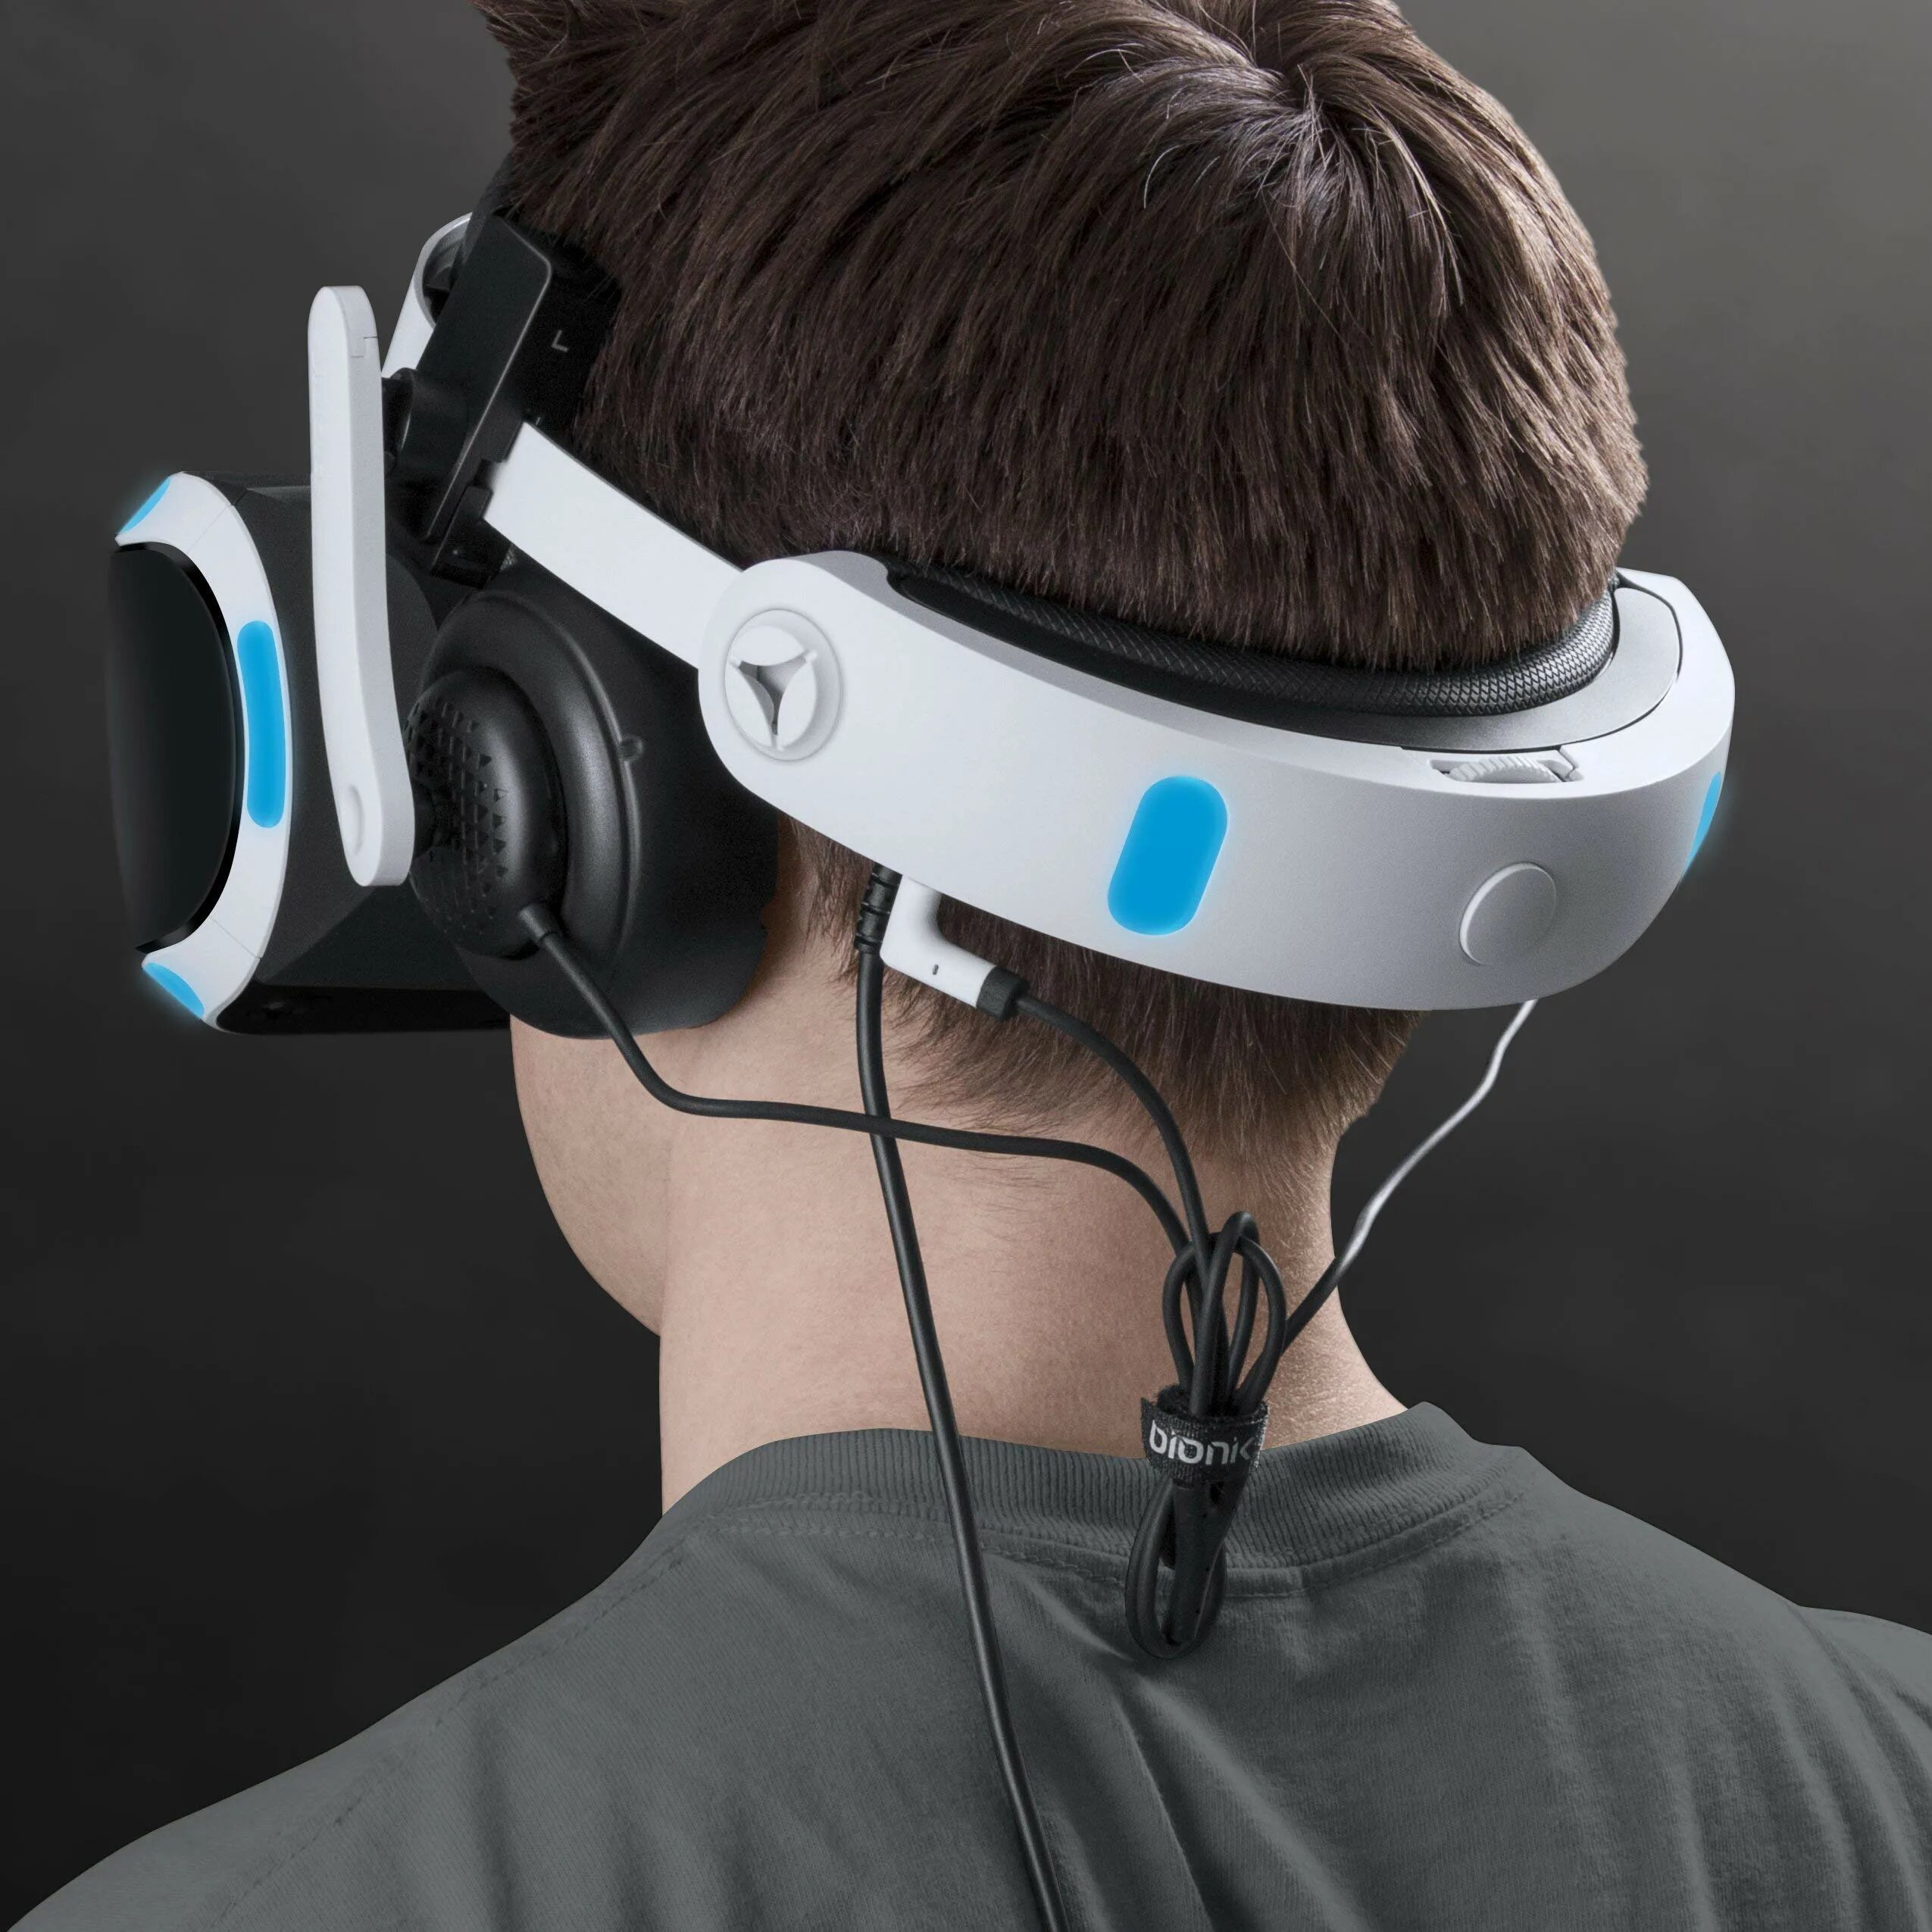 Наушники vr. PS vr2 наушники. PLAYSTATION VR Headset. PS VR наушники комплектные. Наушники для VR ps4.